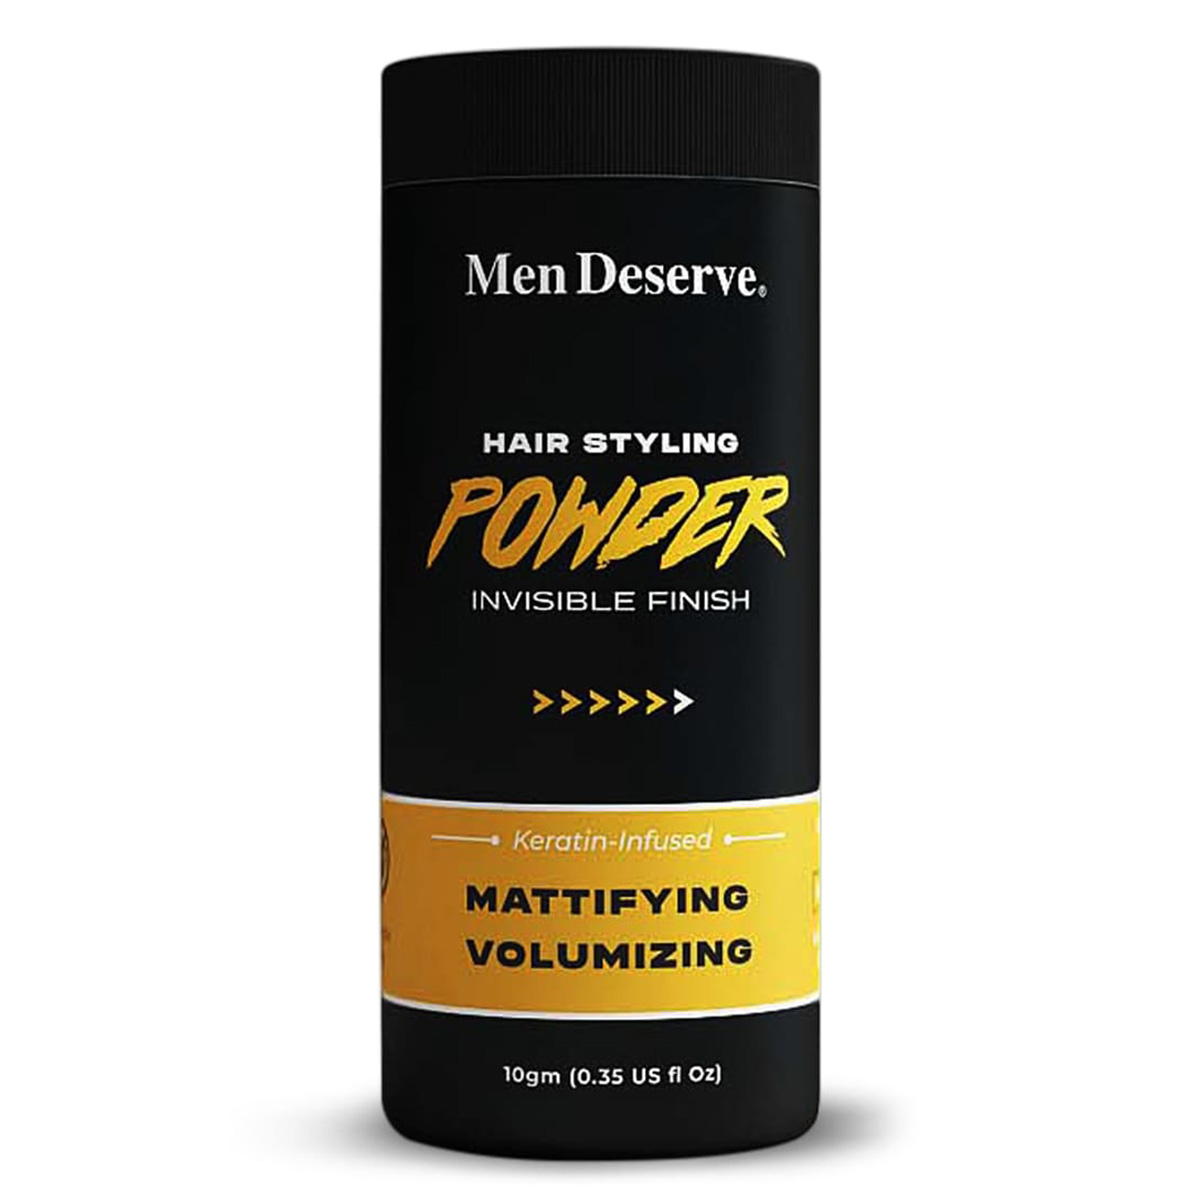 Men Deserve Hair Styling Powder Wax Invisible Finish For Mattifying Volumizing, 10gm